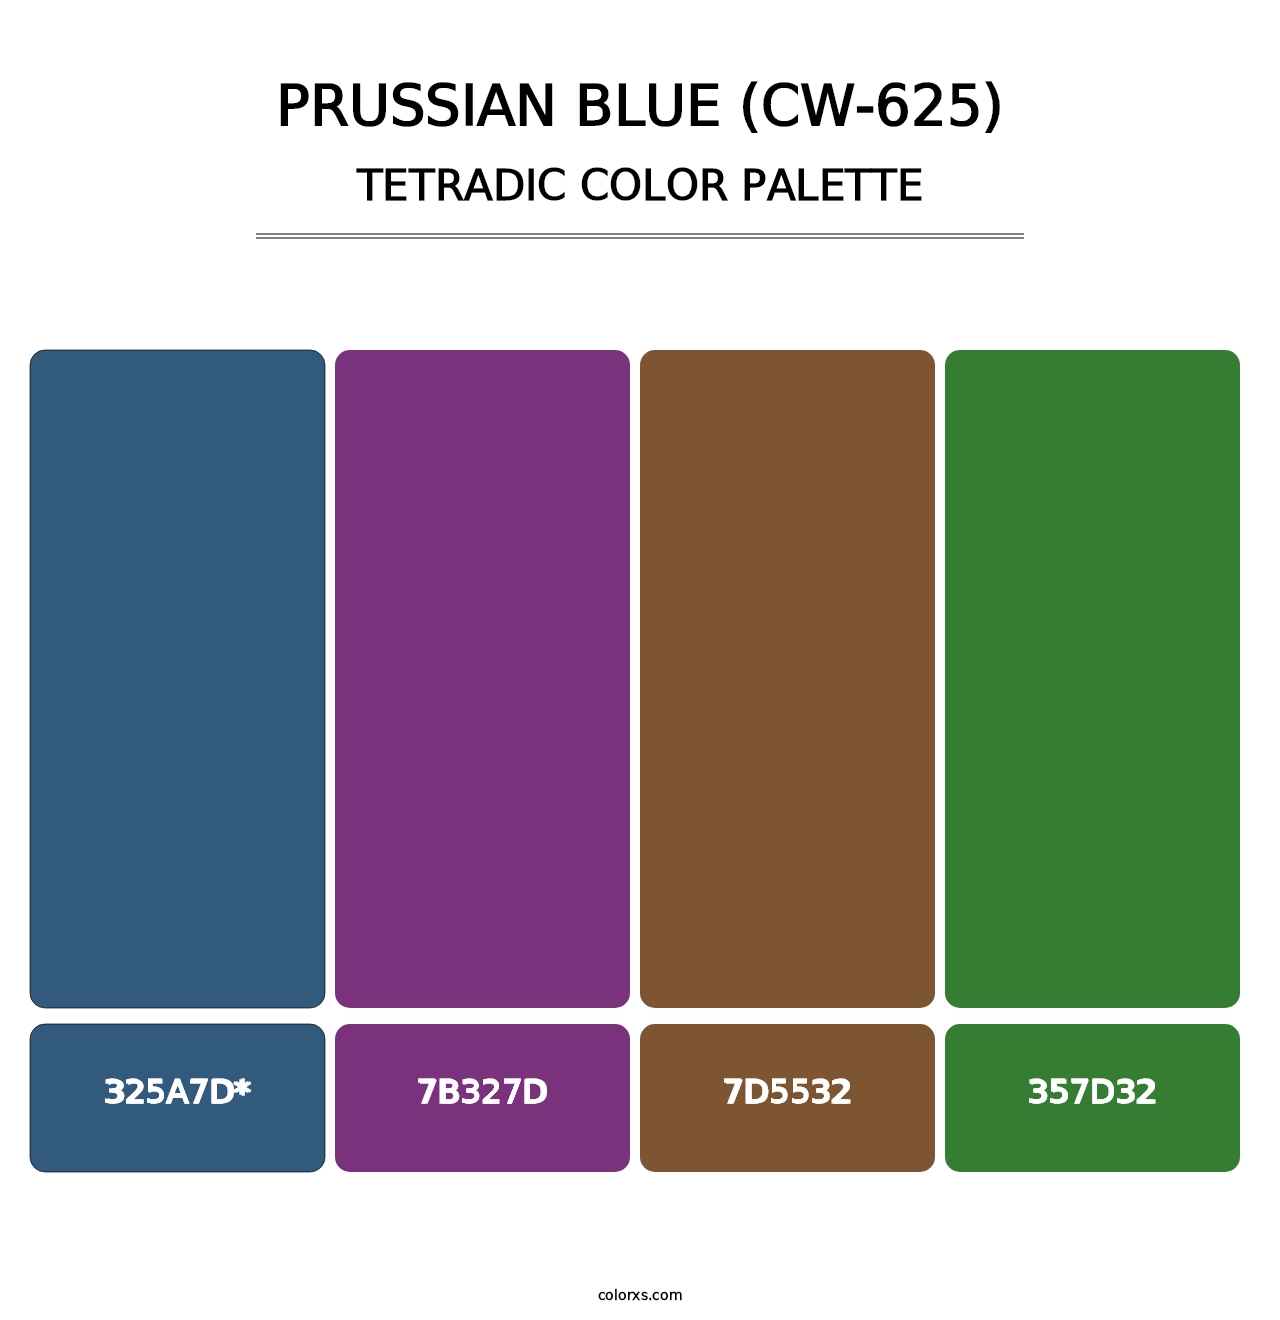 Prussian Blue (CW-625) - Tetradic Color Palette